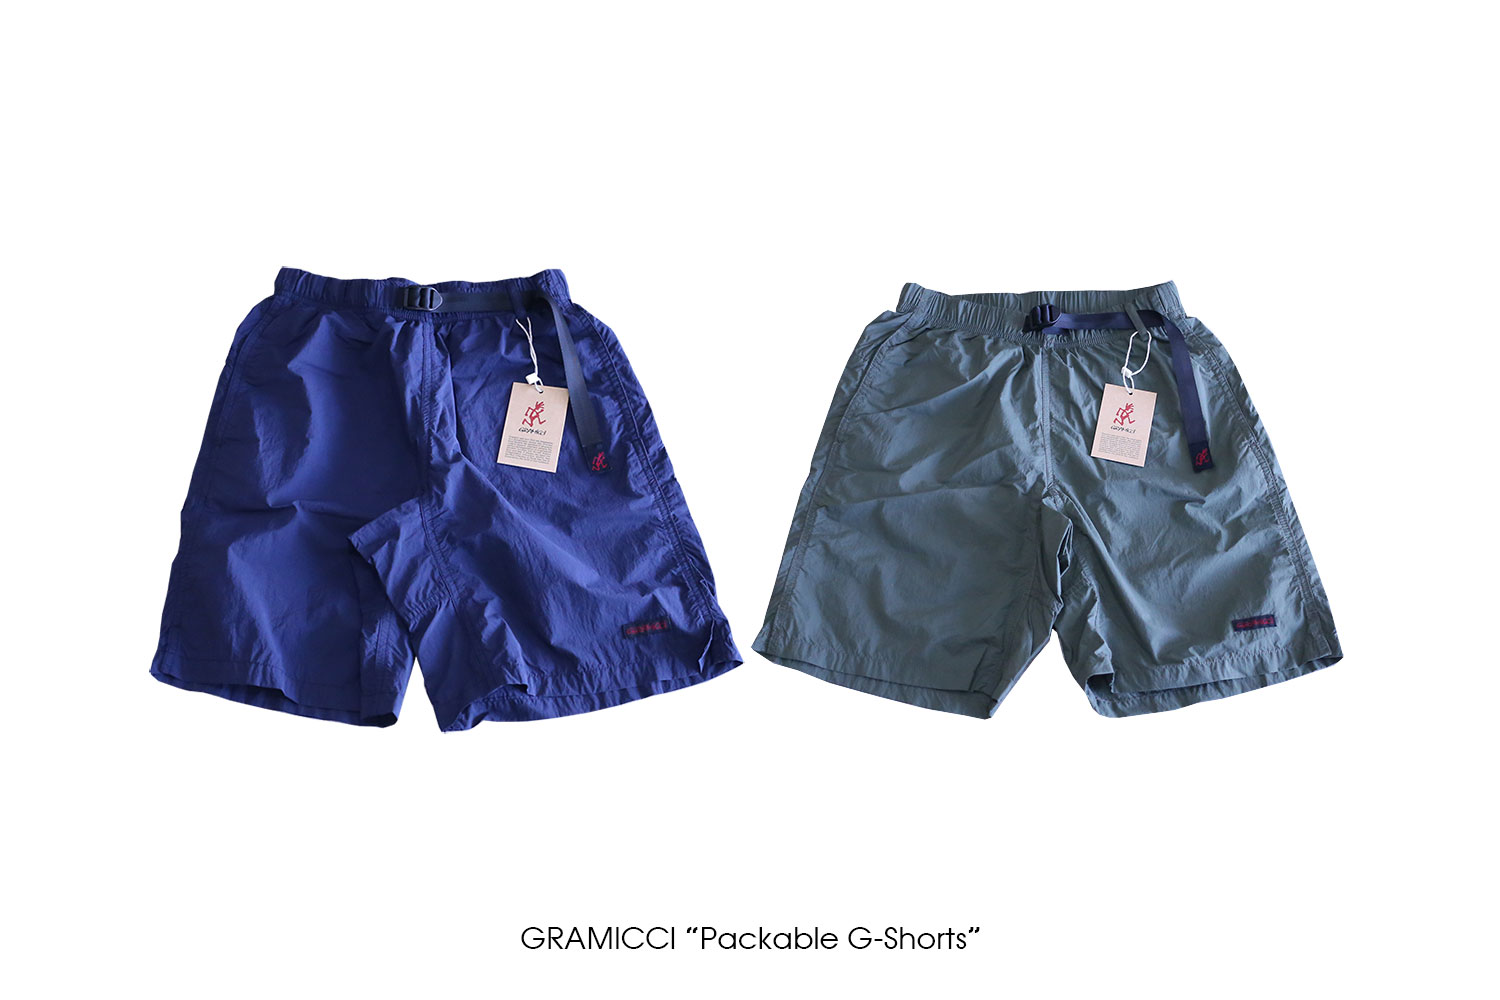 GRAMICCI "Packable G-Shorts"